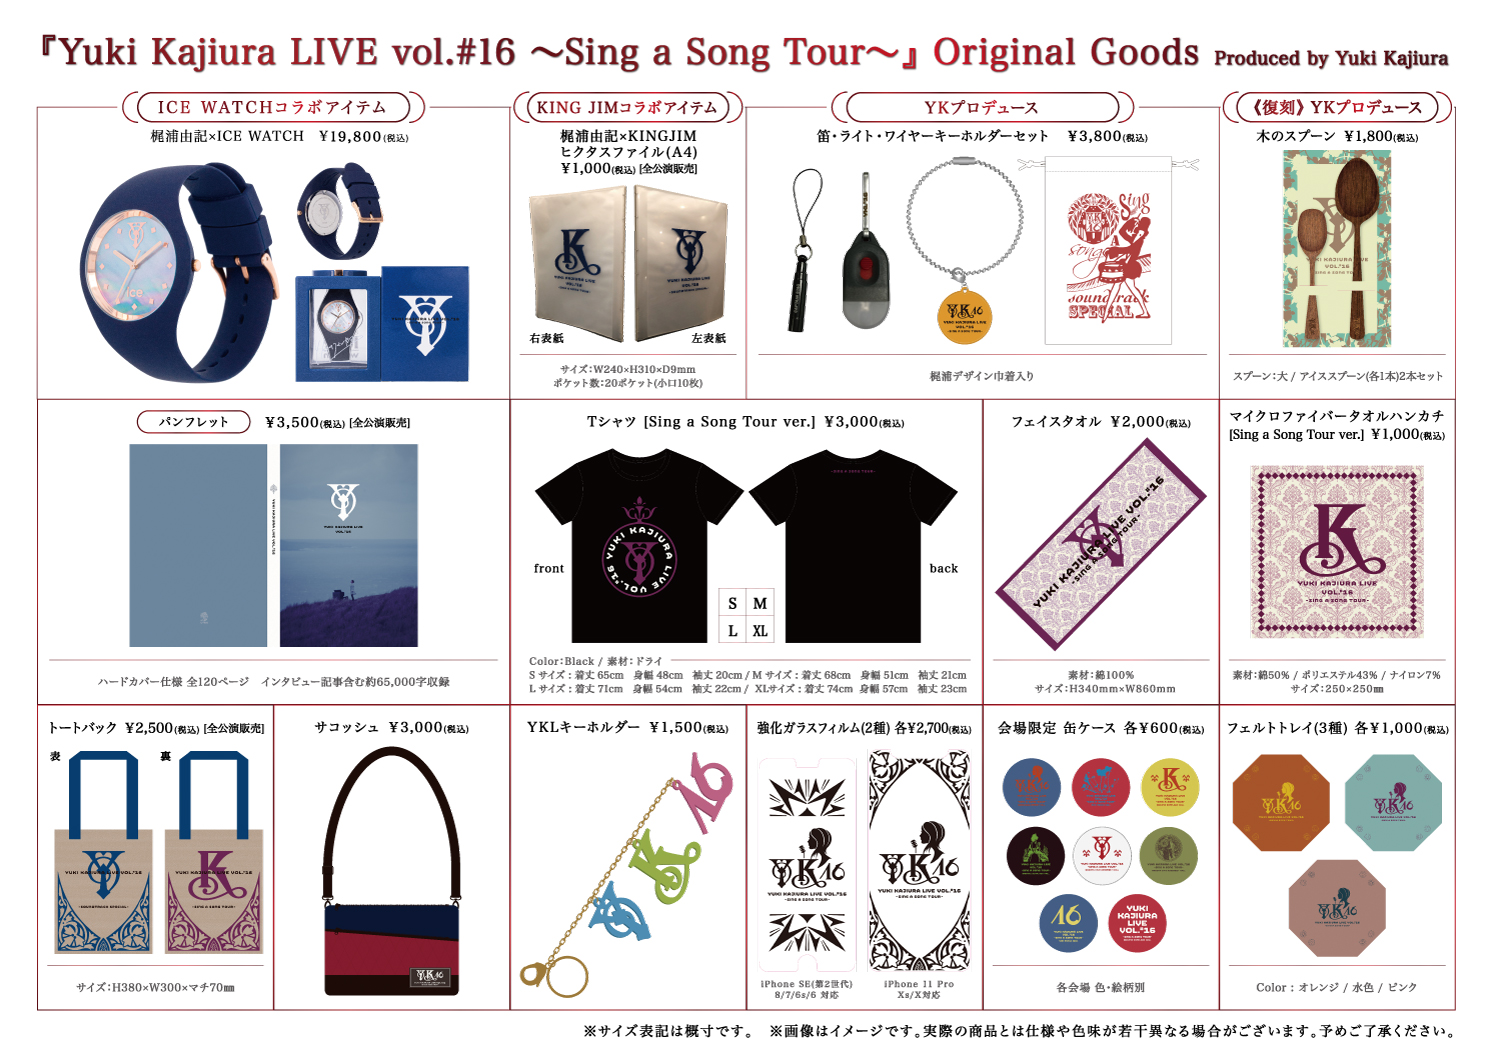 Yuki Kajiura Live Vol 16 Sing A Song Tour グッズ情報 Fictionjunction